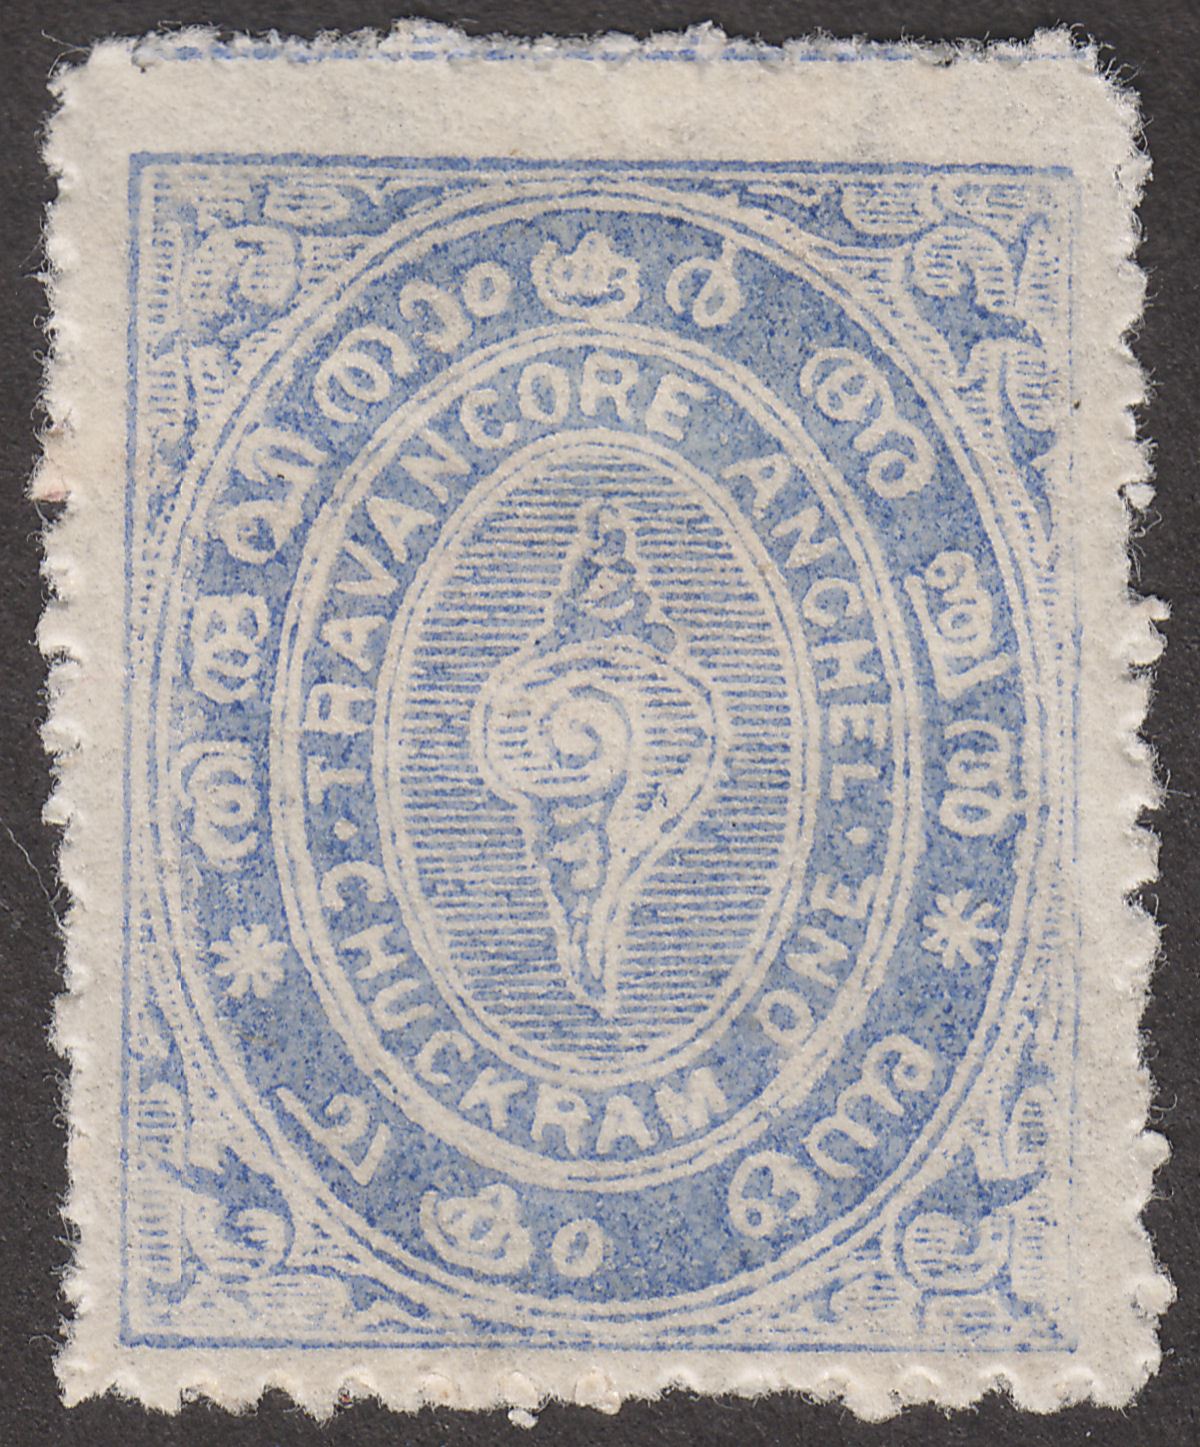 Indian States Travancore 1922 1ch Grey-Blue? Mint SG28? cat £24